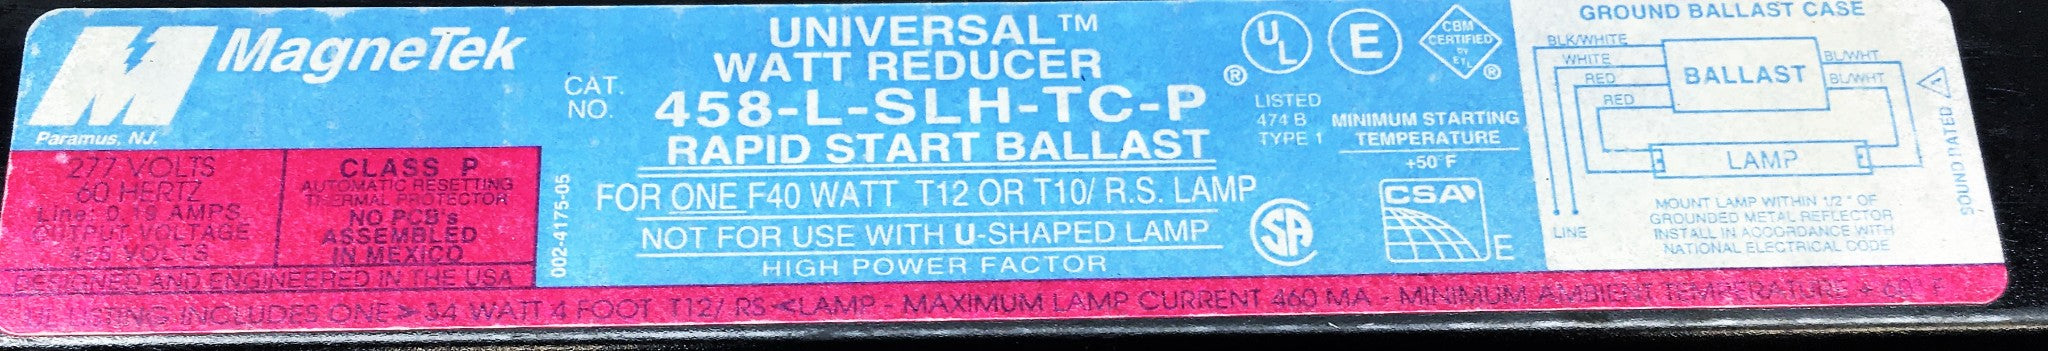 Magnetek Universal 277VAC 60Hz Rapid Start Ballast 458-L-SLH-TC-P [Lot of 2] NOS